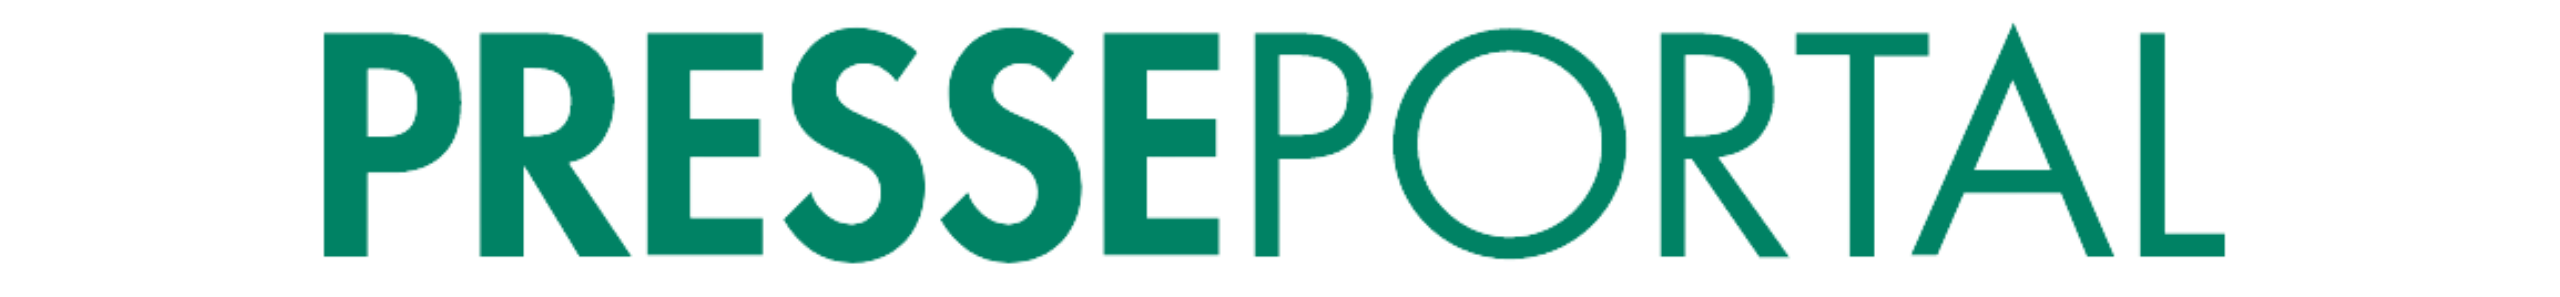 Presseportal_Logo